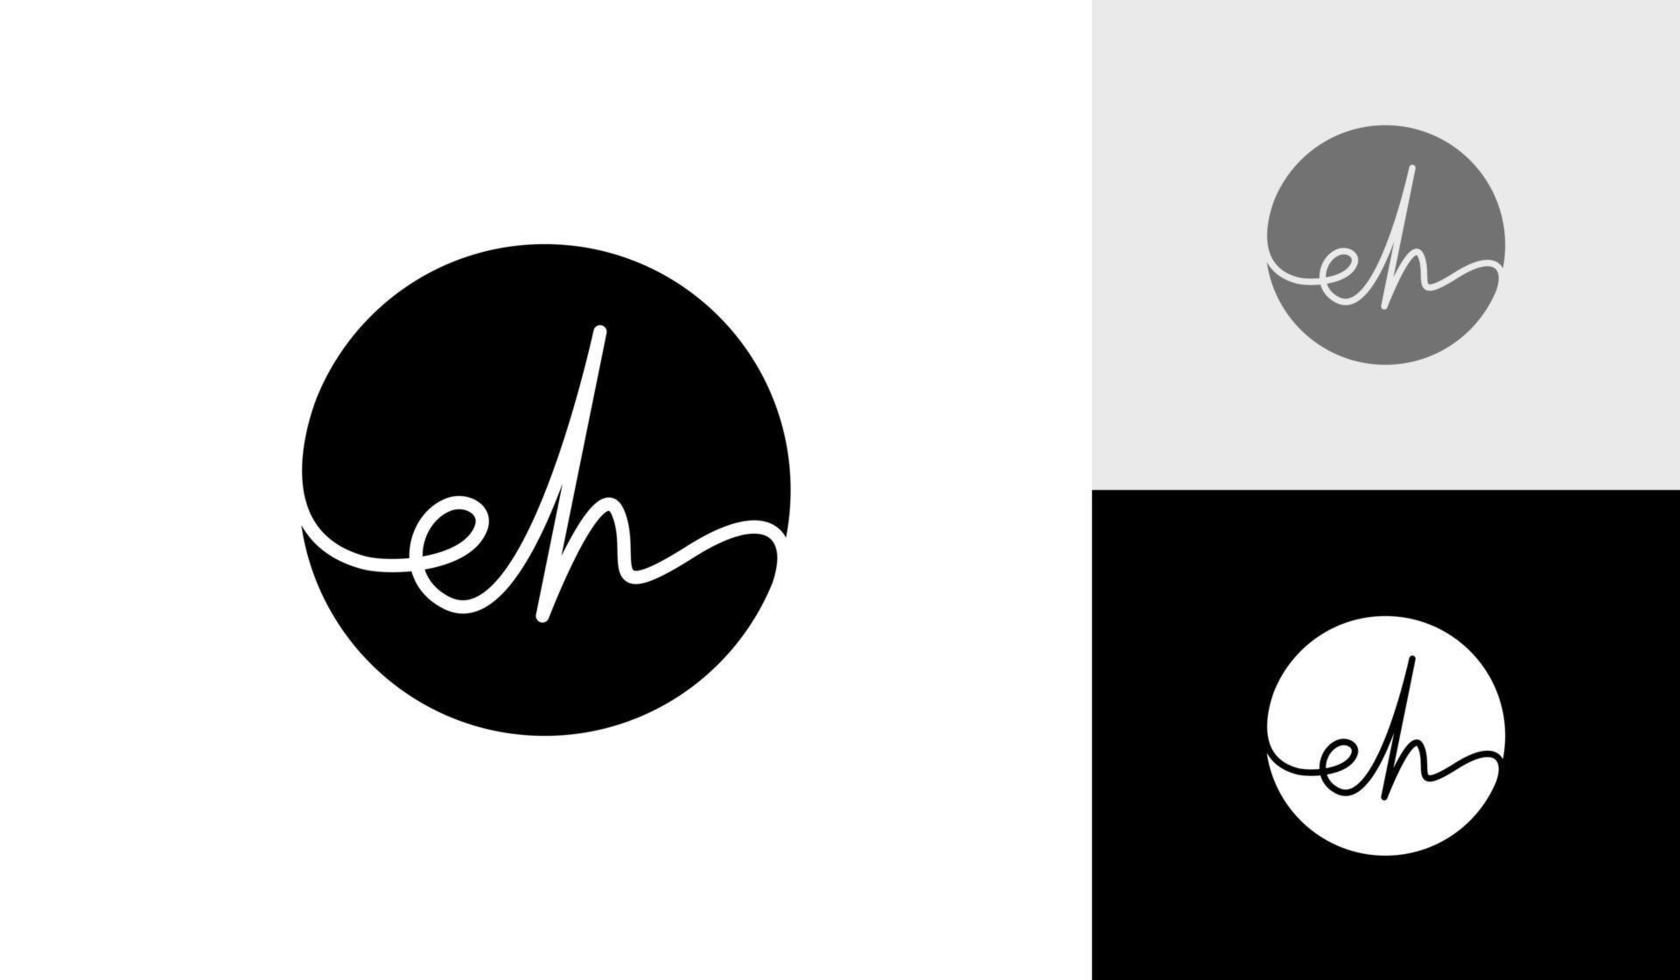 handtekening eerste brief eh monogram logo ontwerp vector